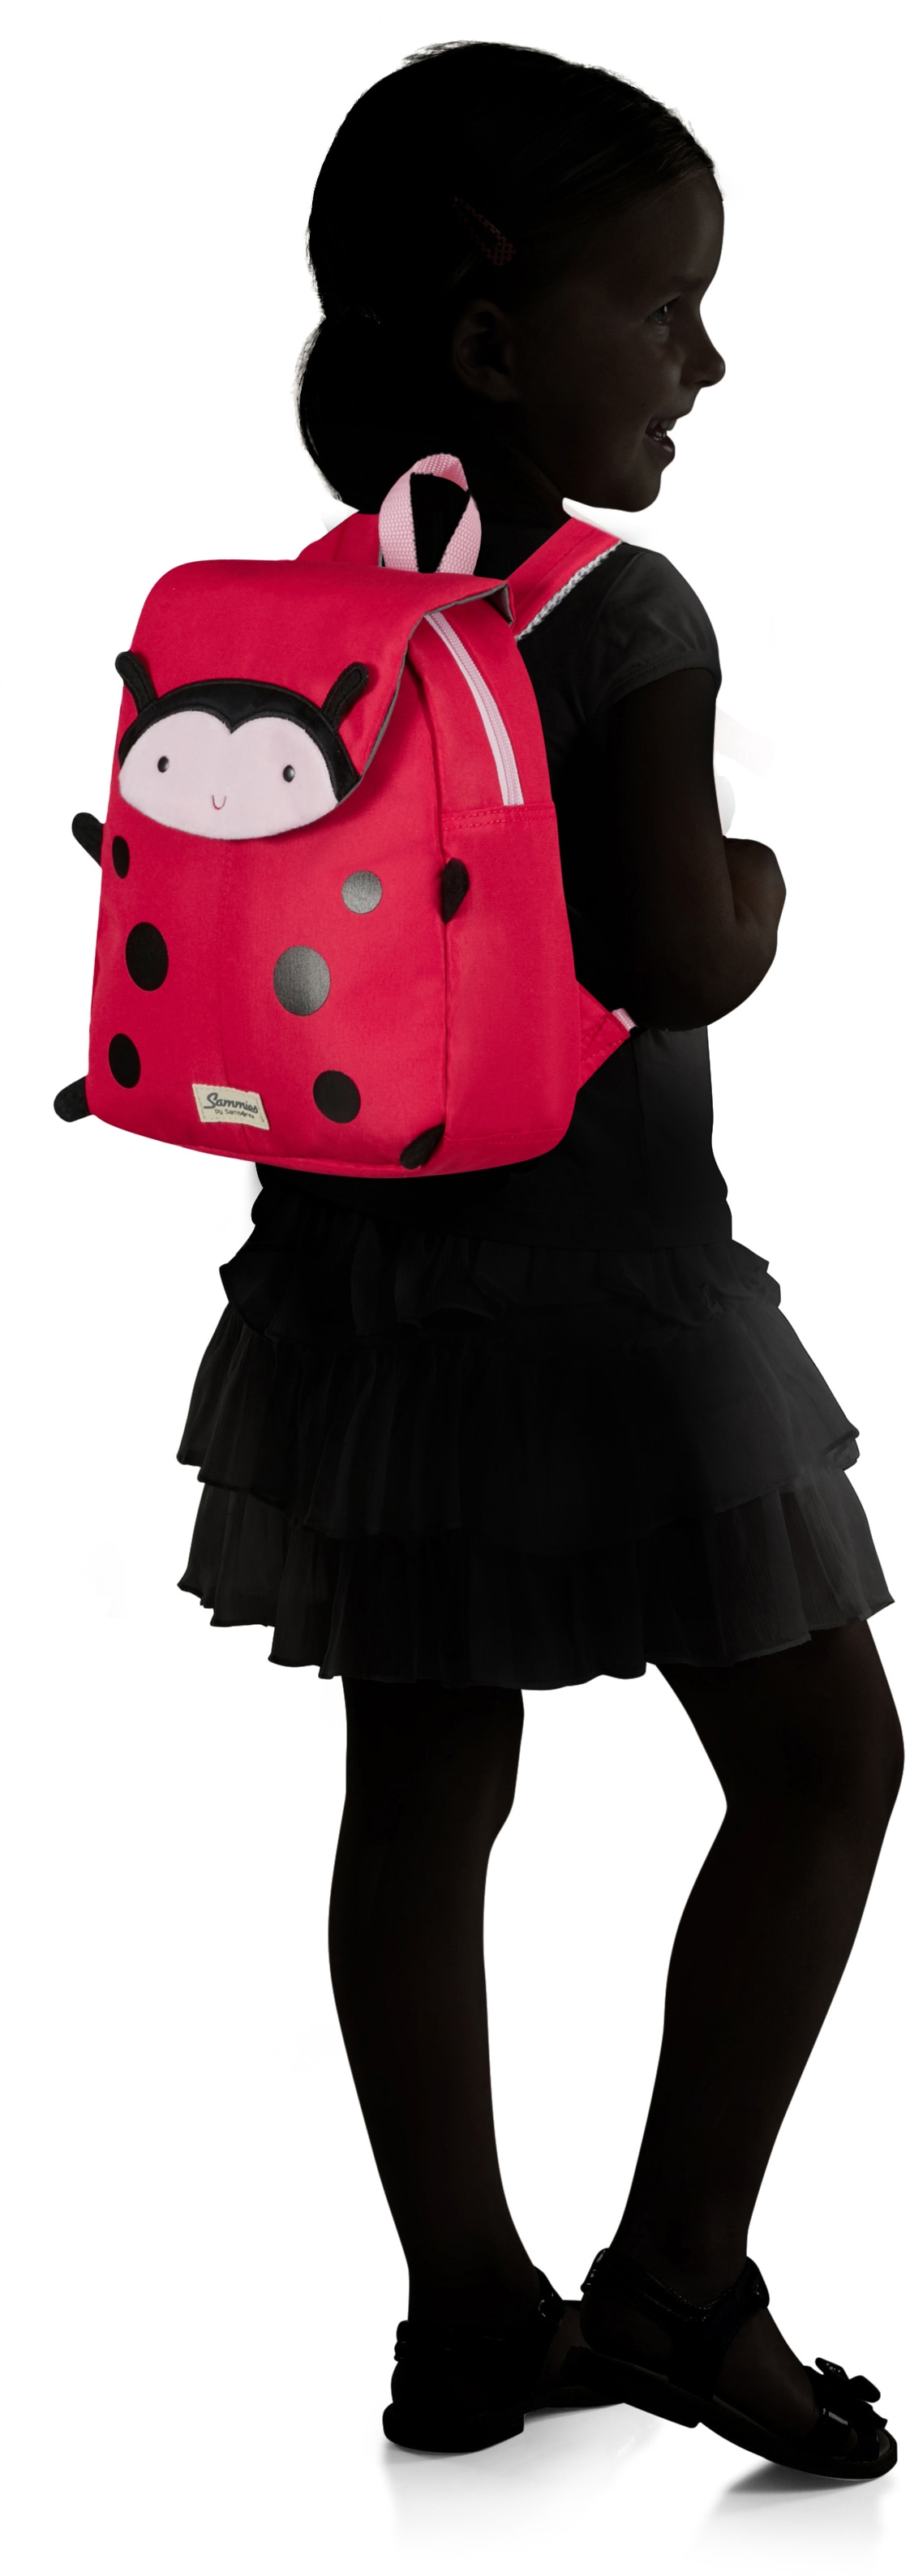 Samsonite Kinderrucksack »Happy Sammies ECO, S, Ladybug Lally«, Kindergartenrucksack Kinderfreizeitrucksack Kinder-Backpack